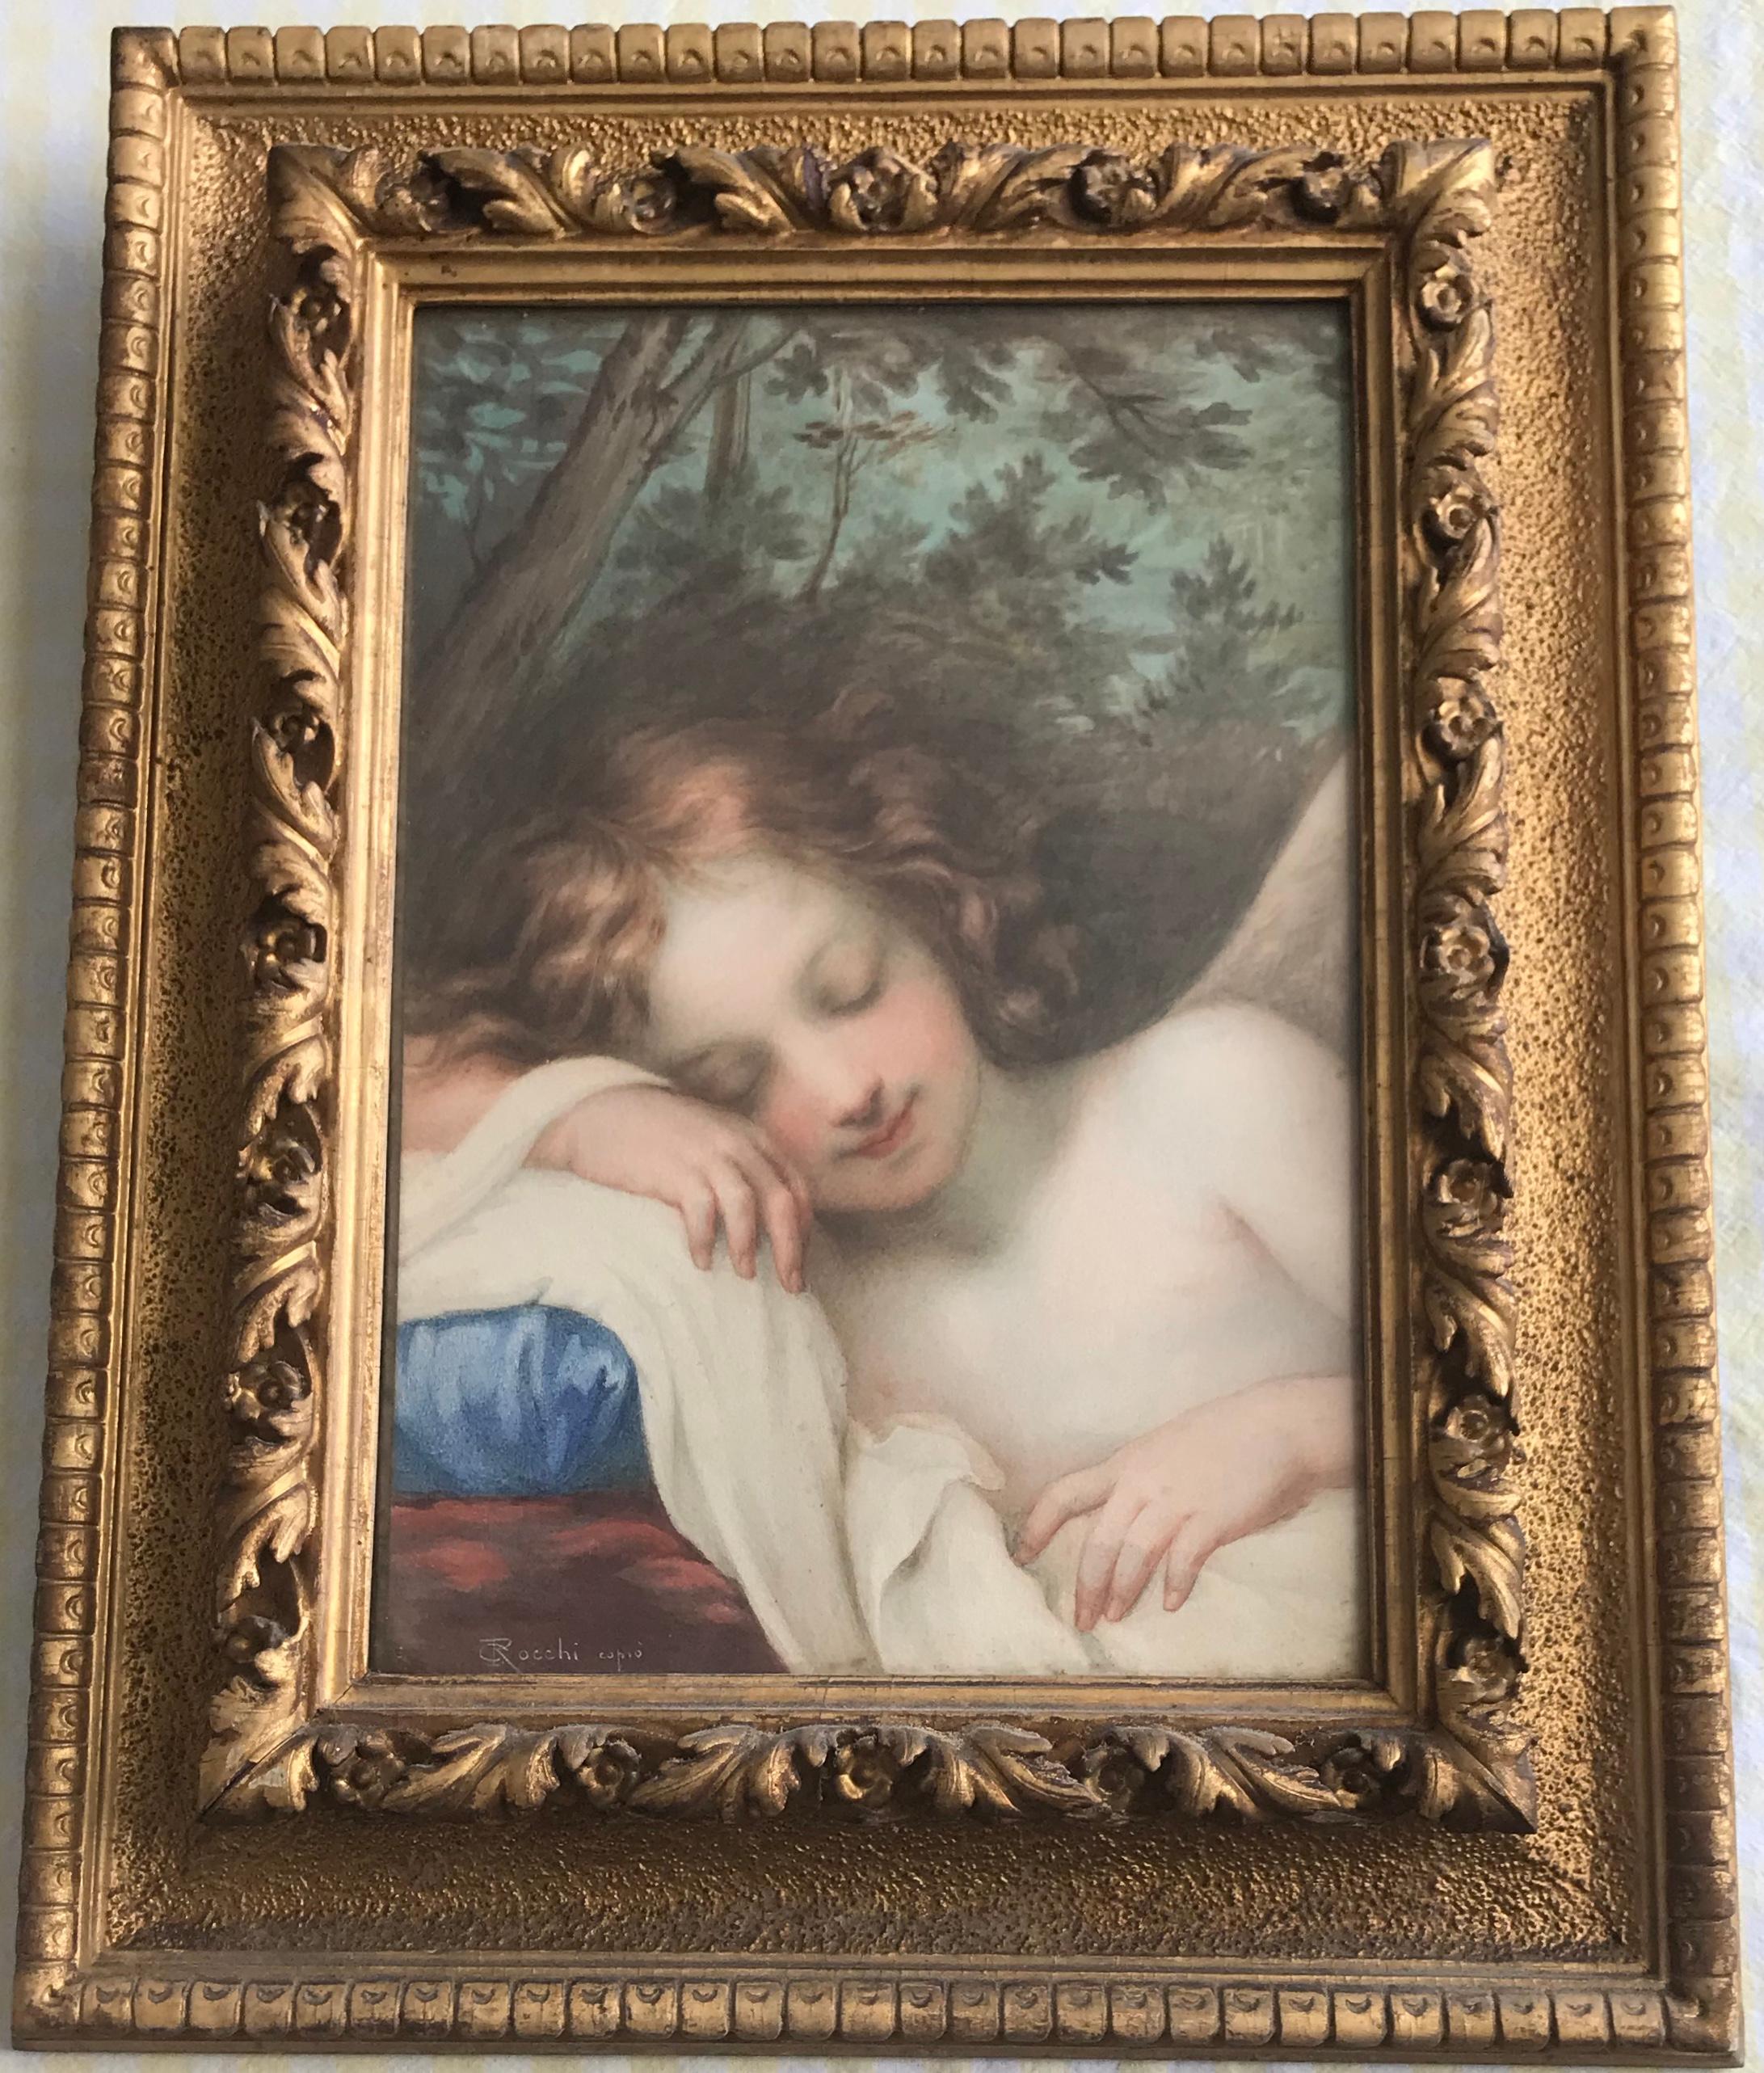 Baldassarre Franceschini, Sleeping Cupid, cadeau pour la Saint-Valentin